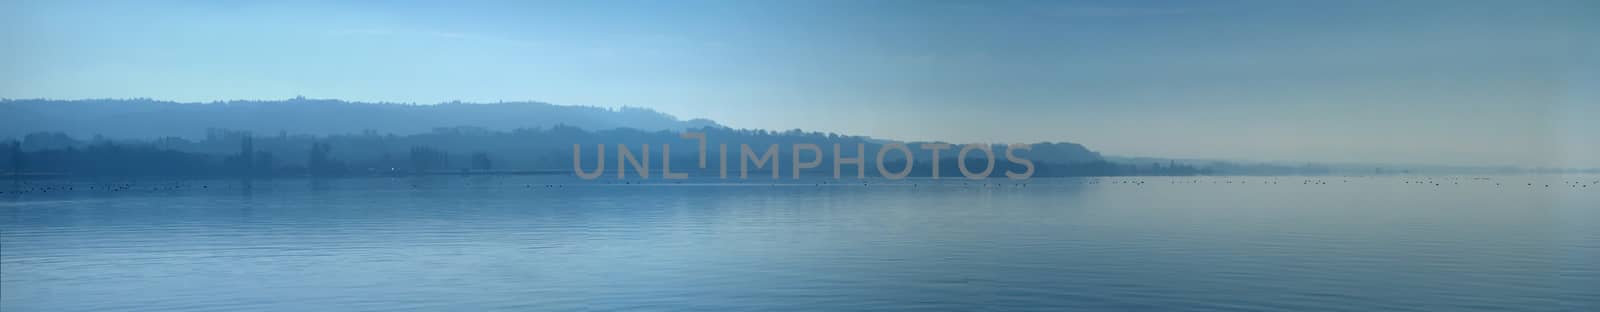 Panoramic view of Neuchatel lake by beautiful blue day, Switzerland